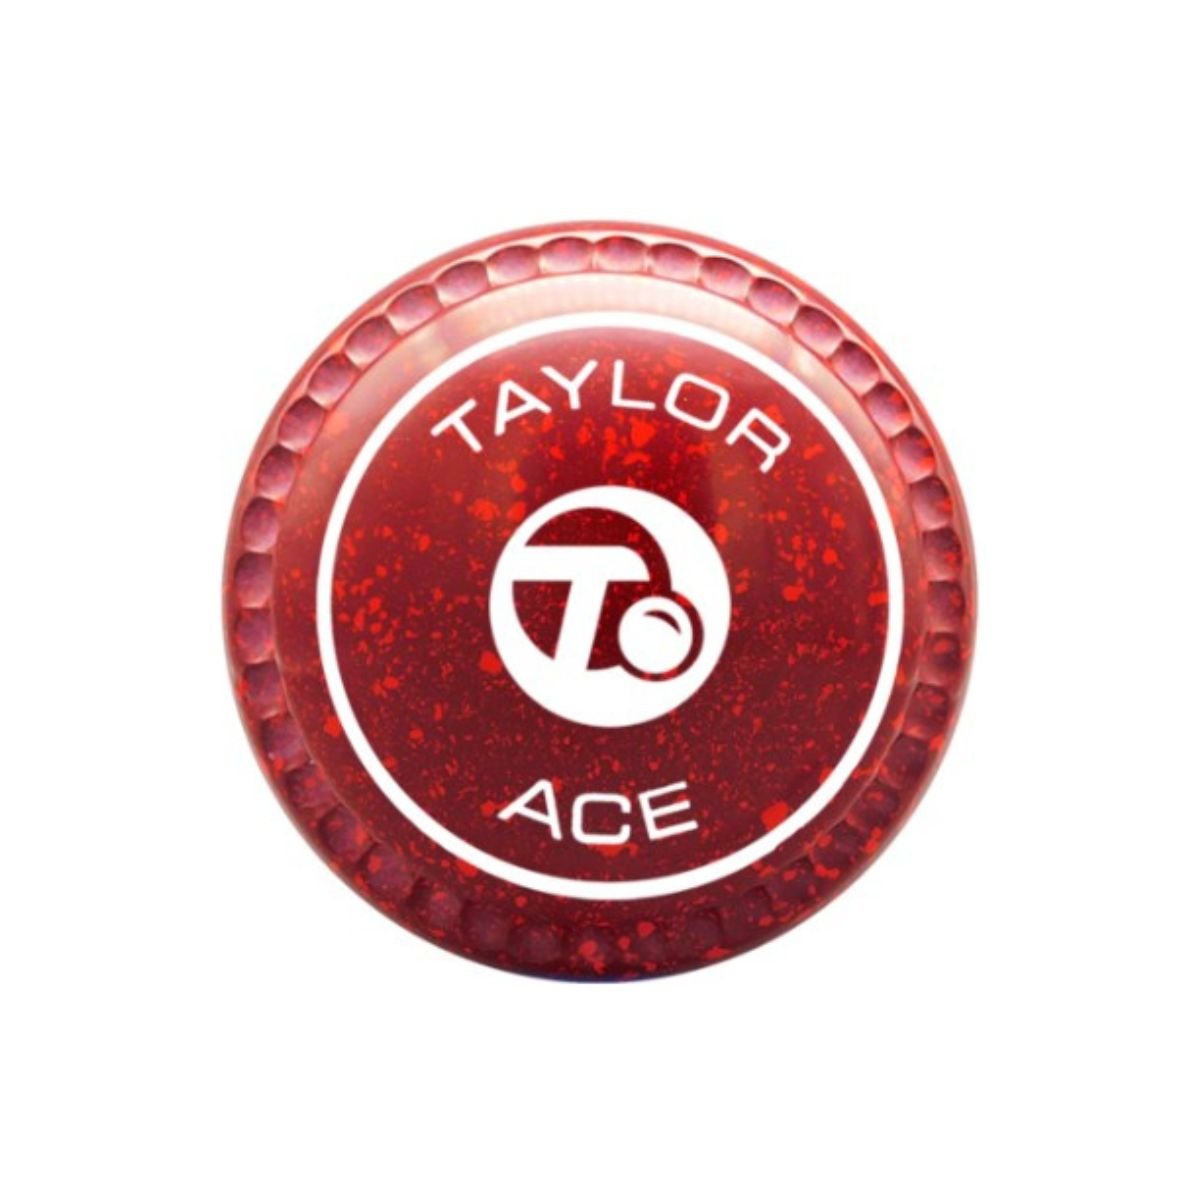 Taylor ace xtreme grip coloured bowls - 5